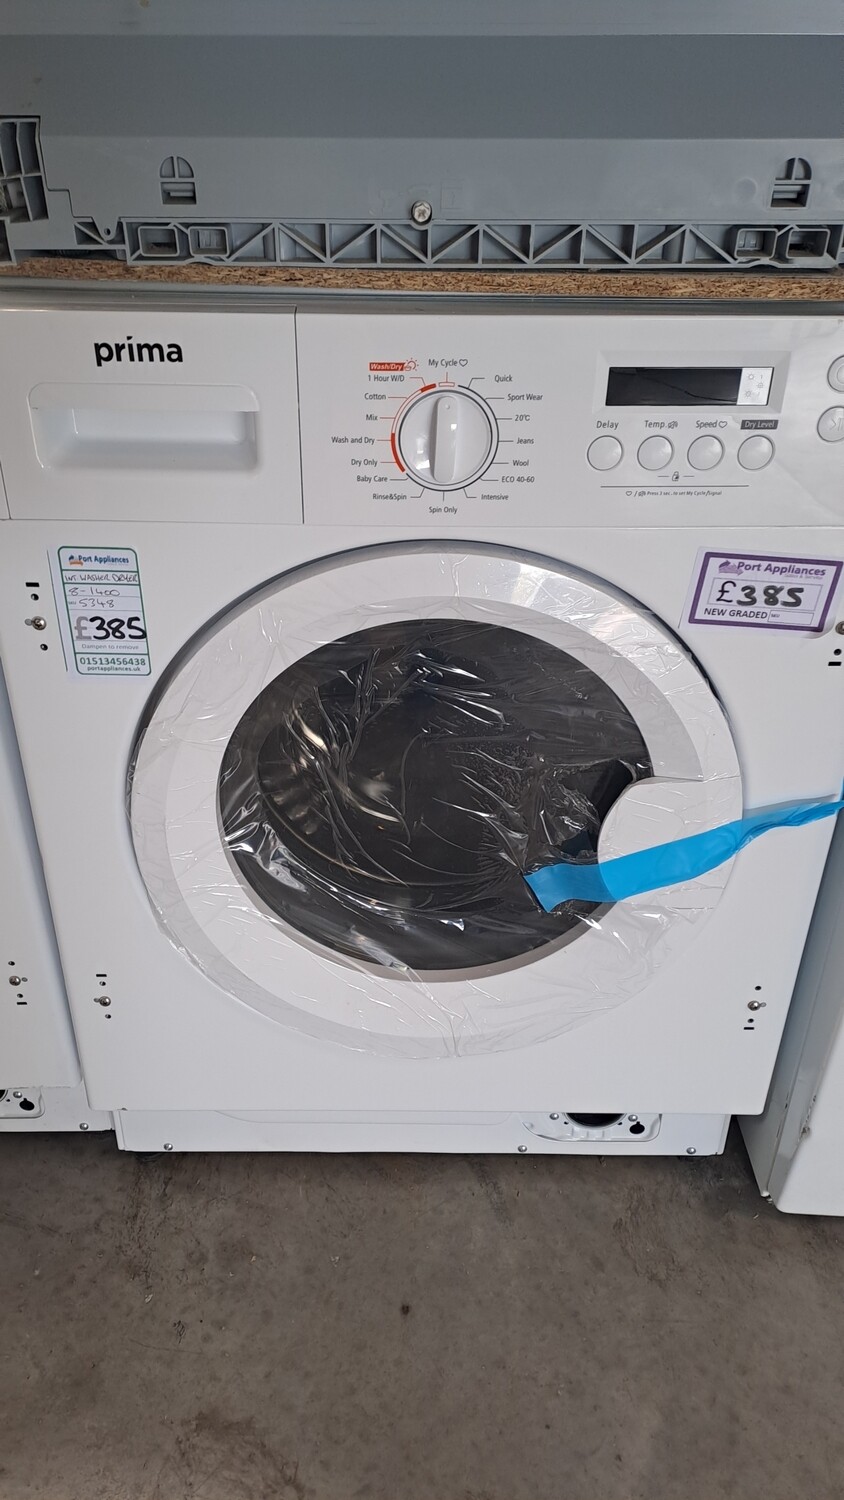 Prima PRLD375 8kg 1400 Built in Integrated Washer Dryer White New Graded